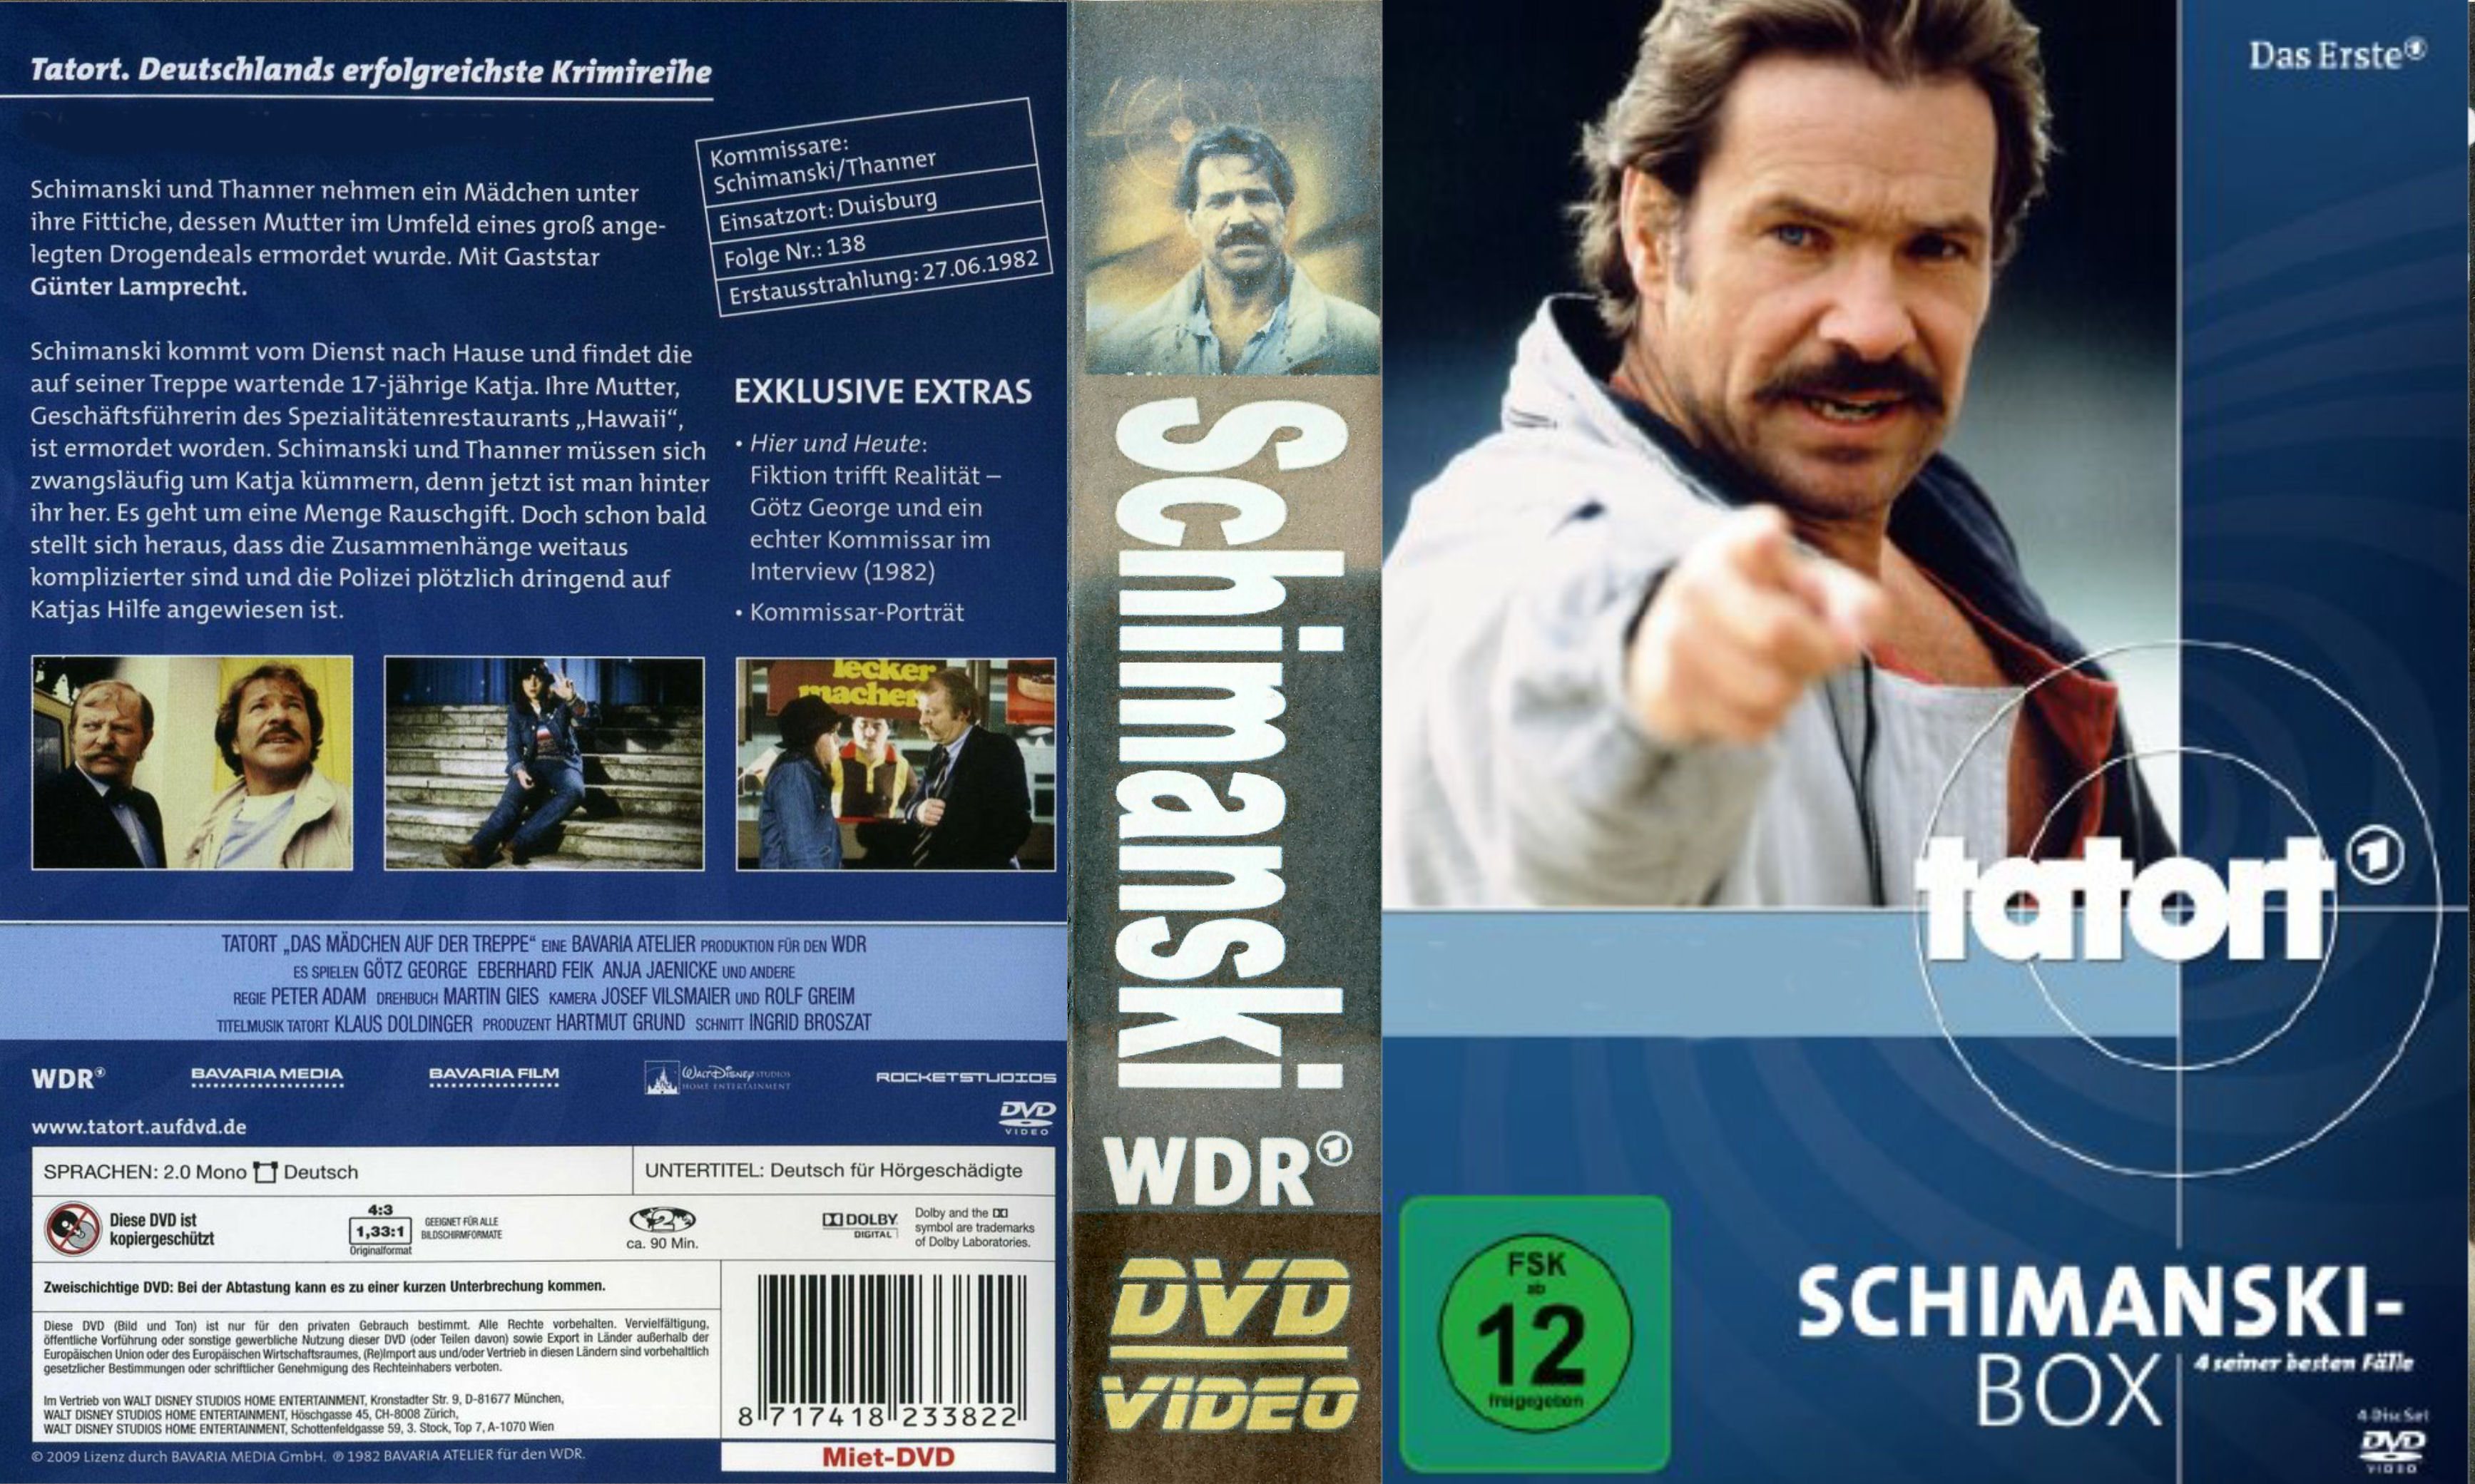 Schimanski Collectie Tatort No Subs - DvD 1